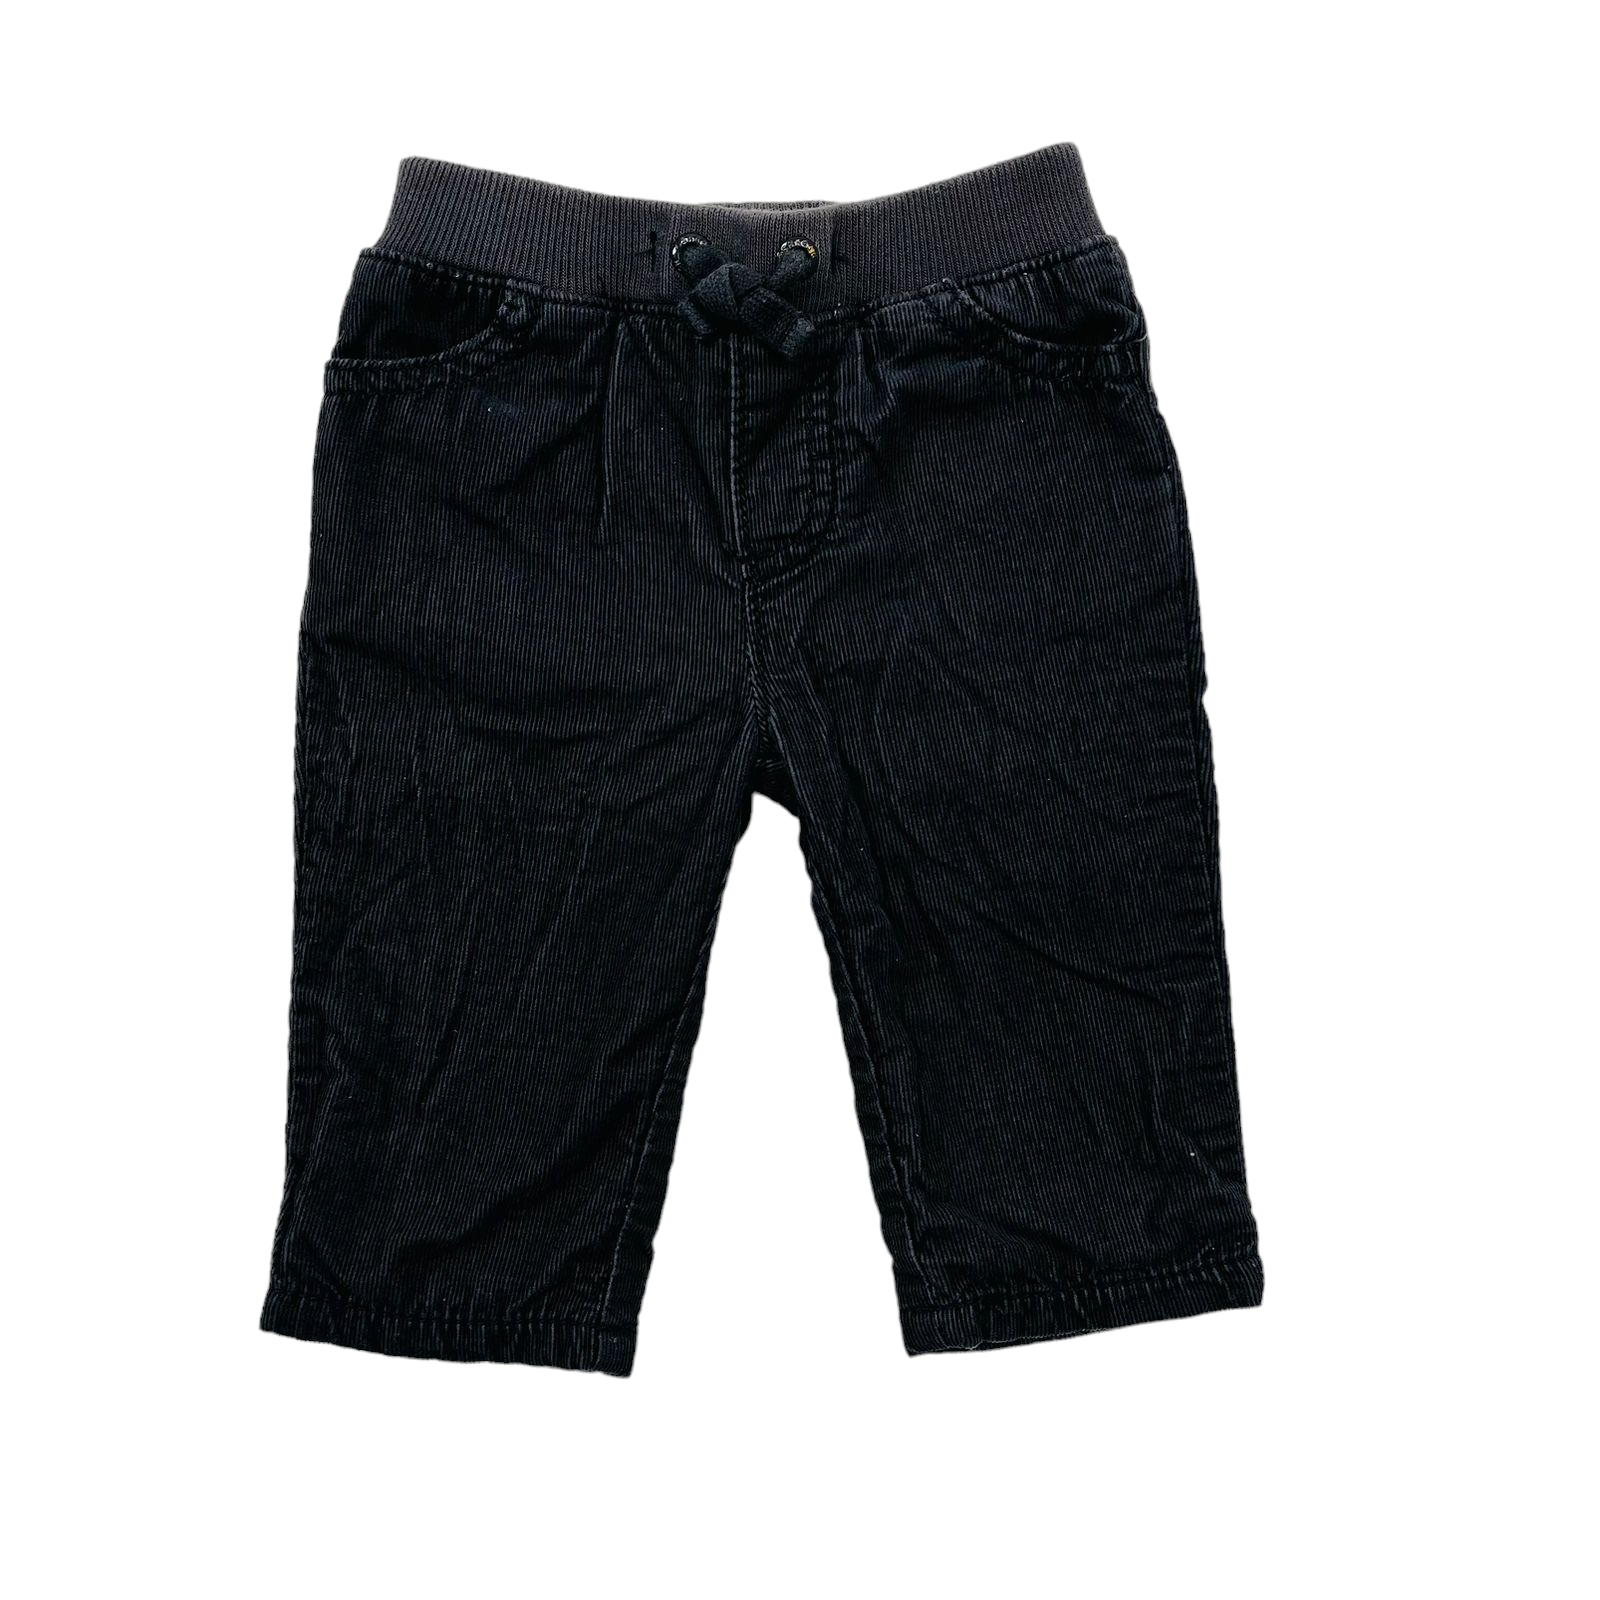 Pantalon cotele gris oscuro con pretina y bolsillos